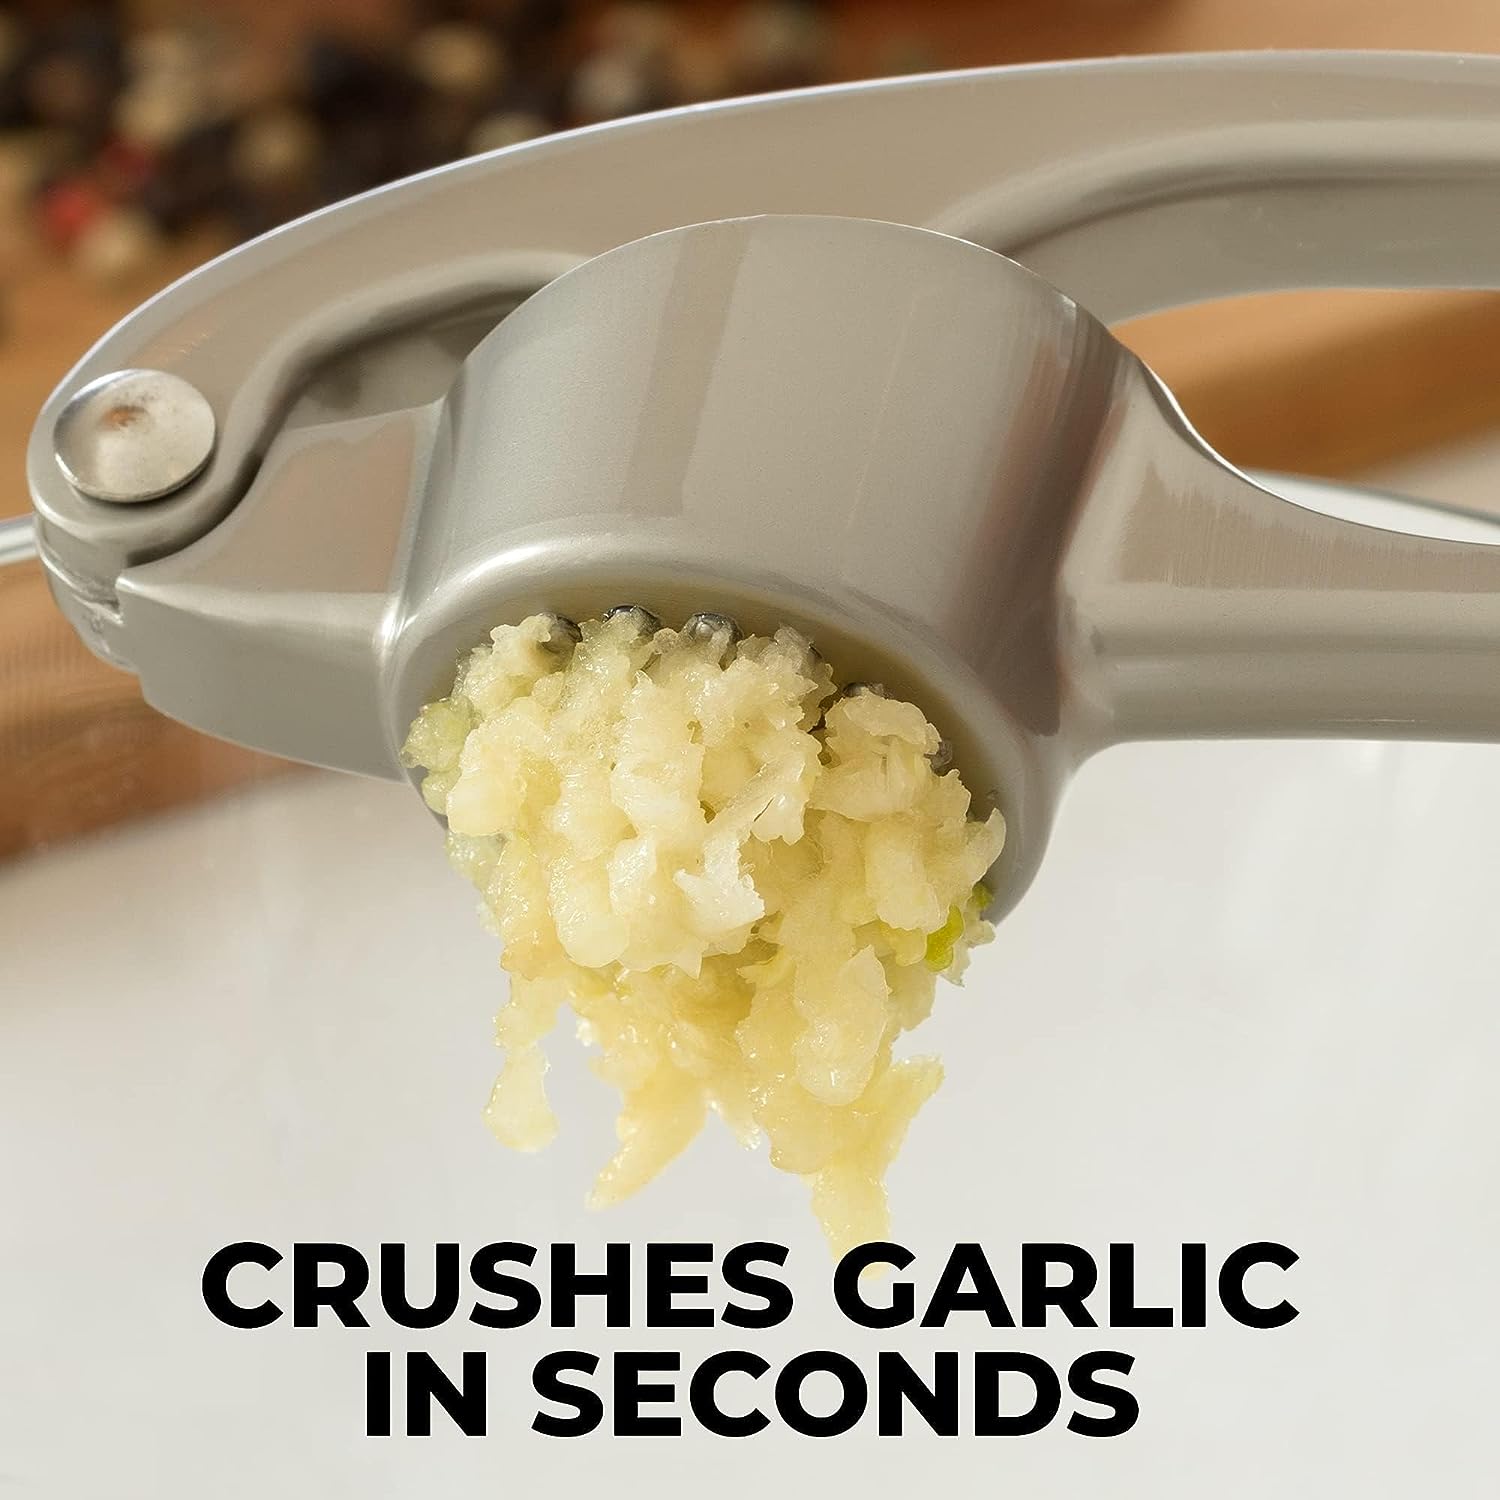 garlic press that can crush garlic in seconds